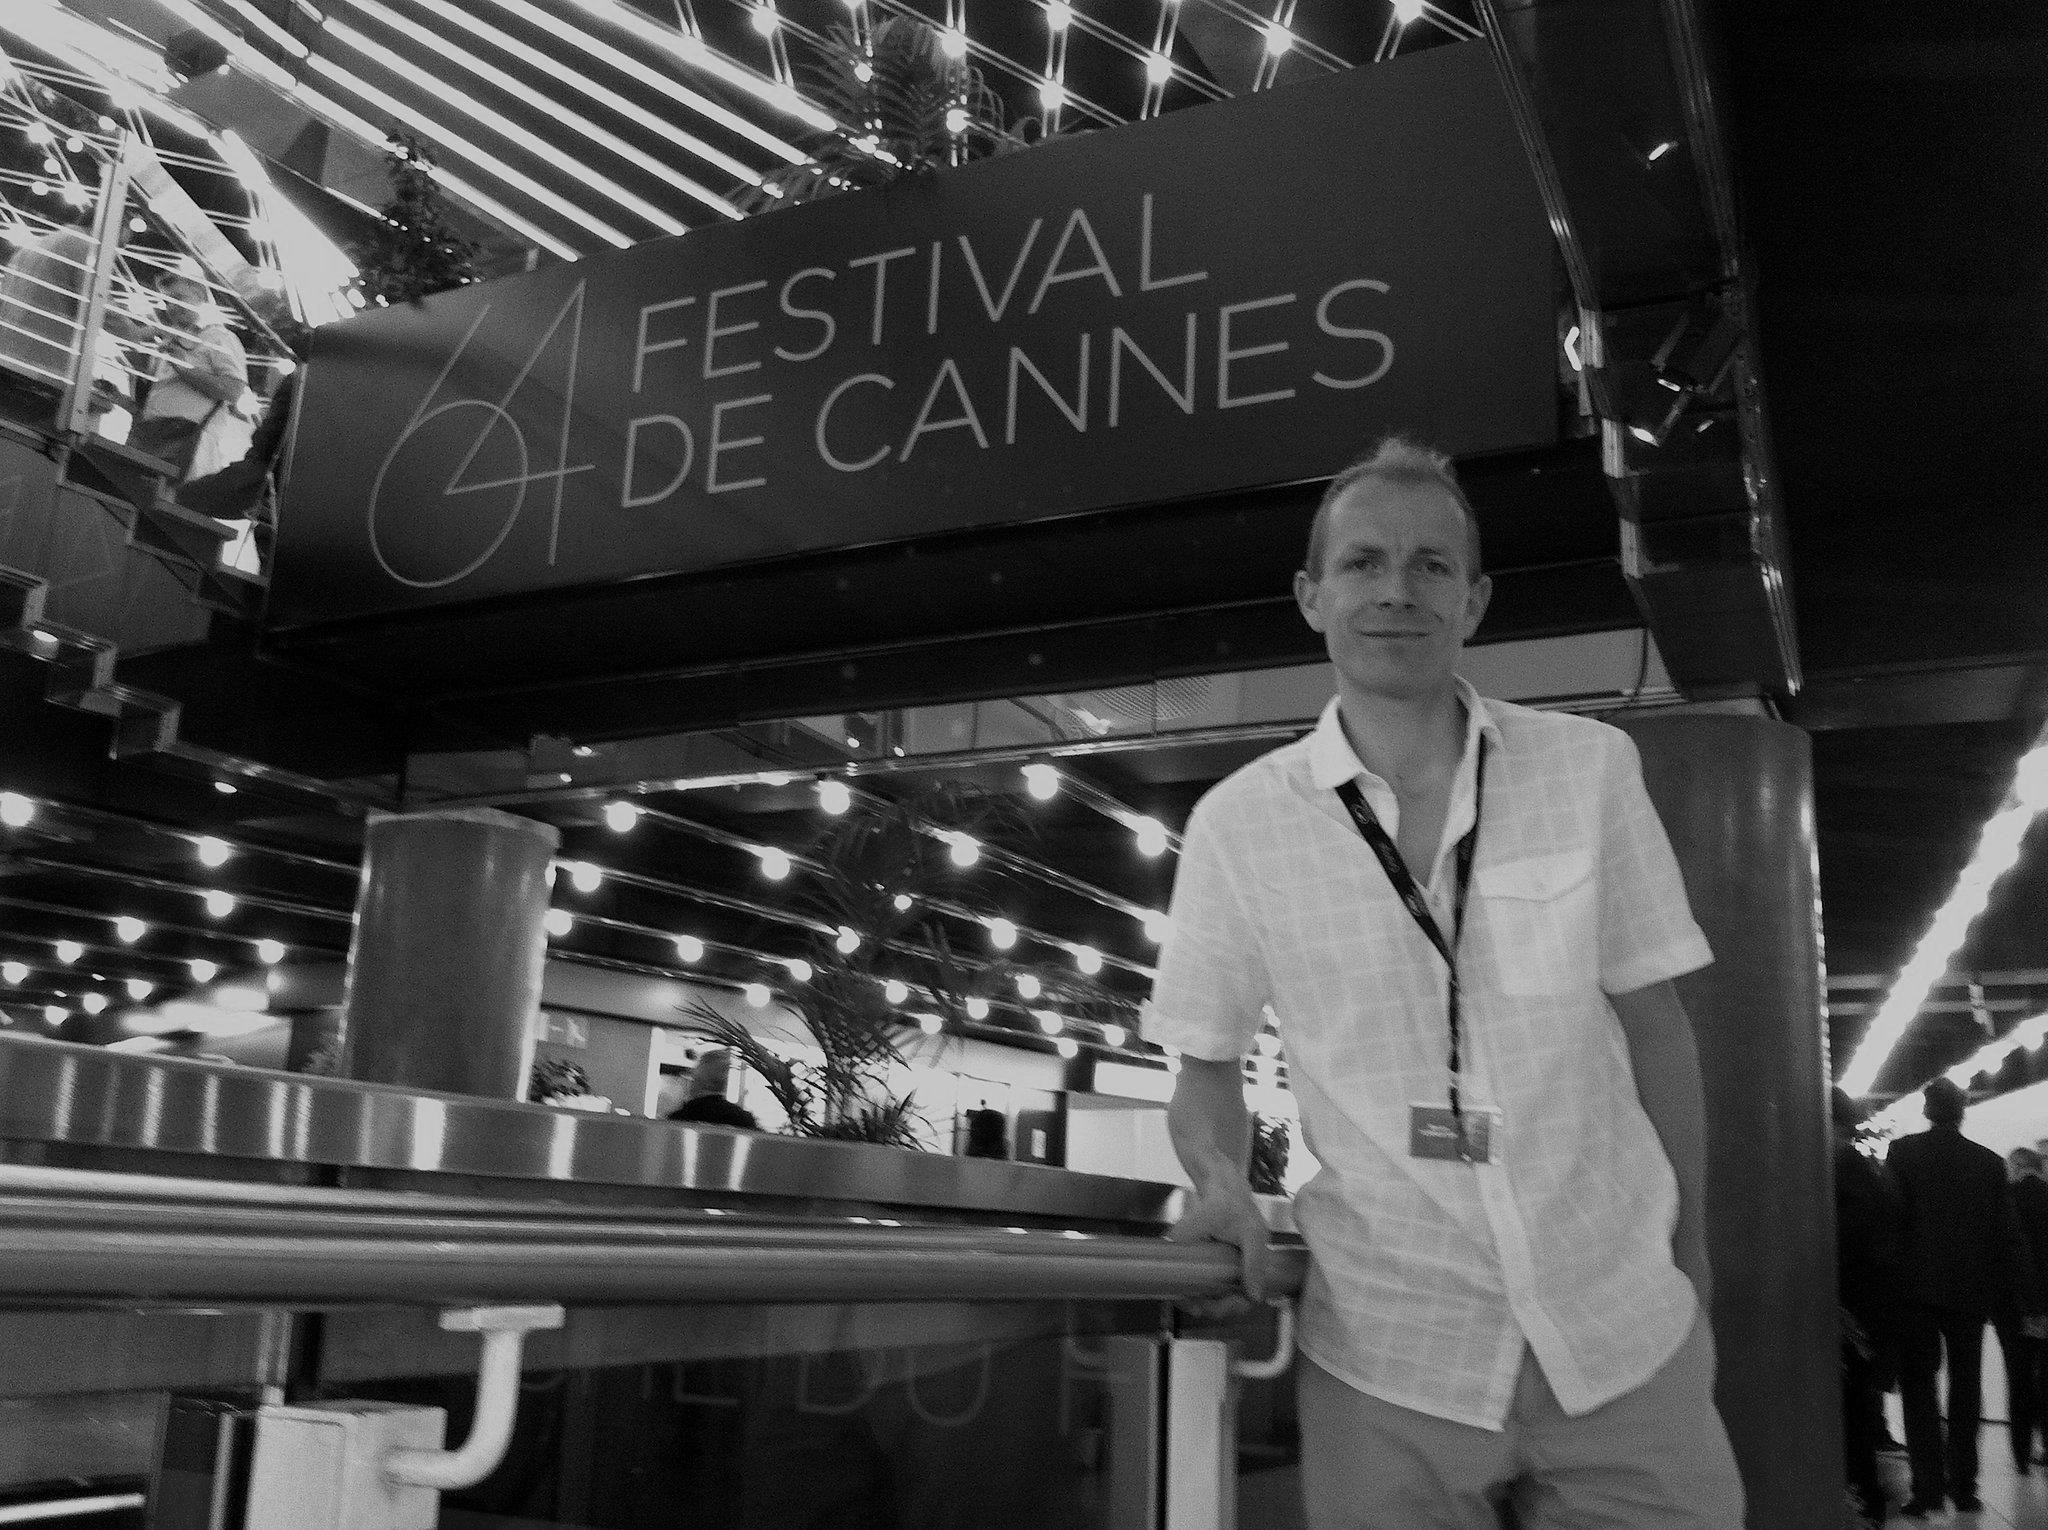 Steven Forrester at The Cannes Film Festival 2011